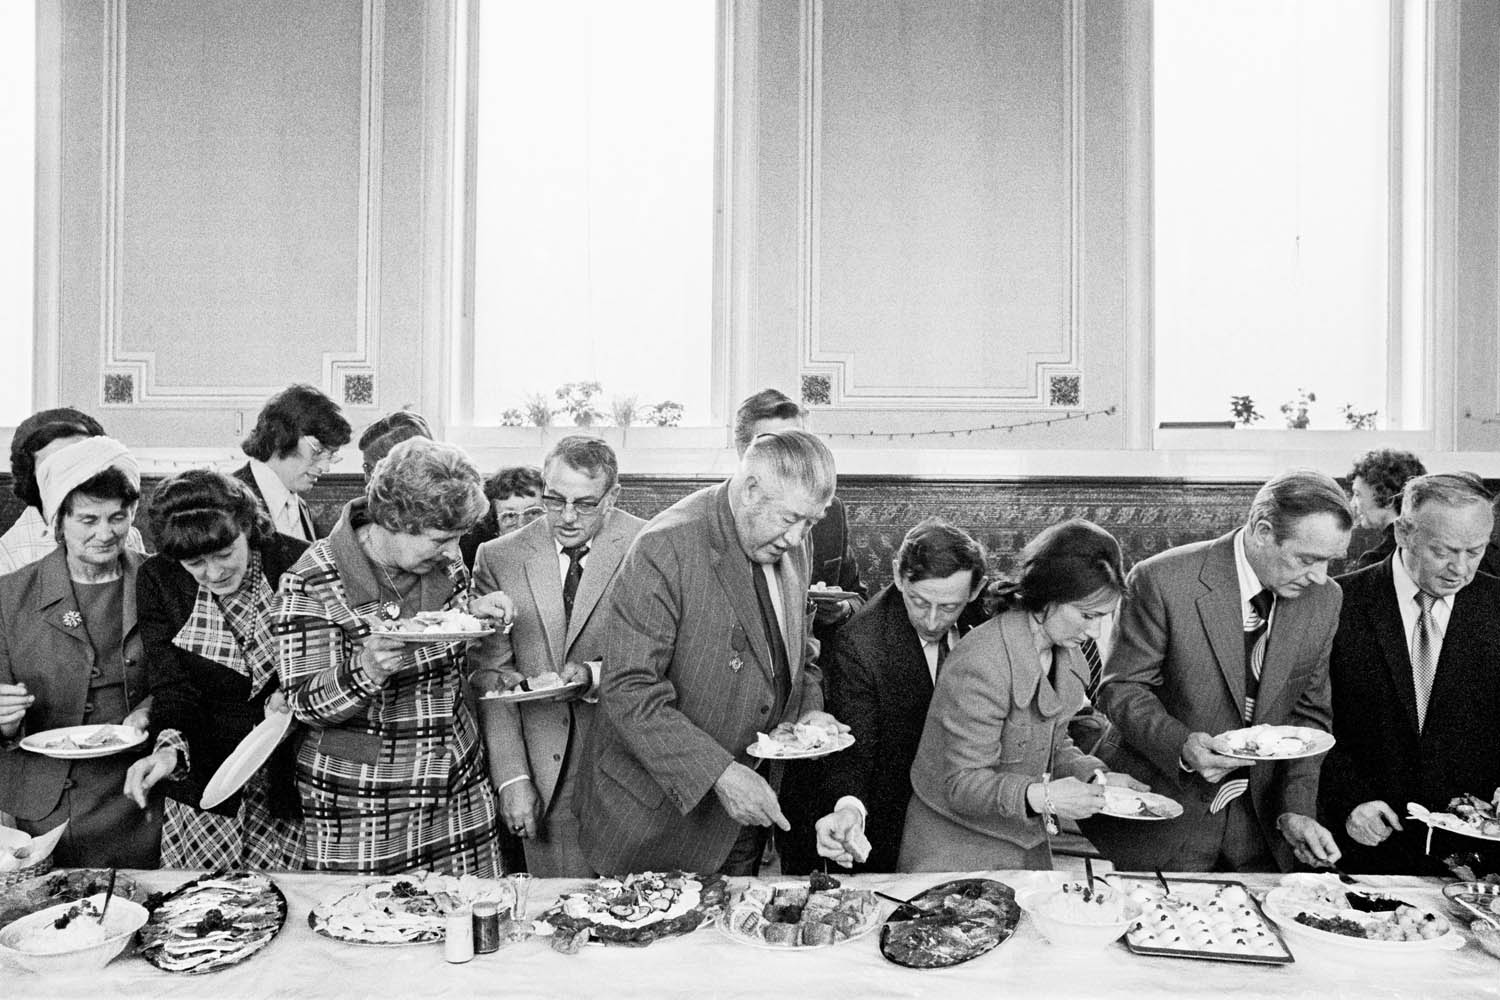 GB. England. West Yorkshire. Todmorden. Mayor of Todmorden's inaugural banquet. 1977